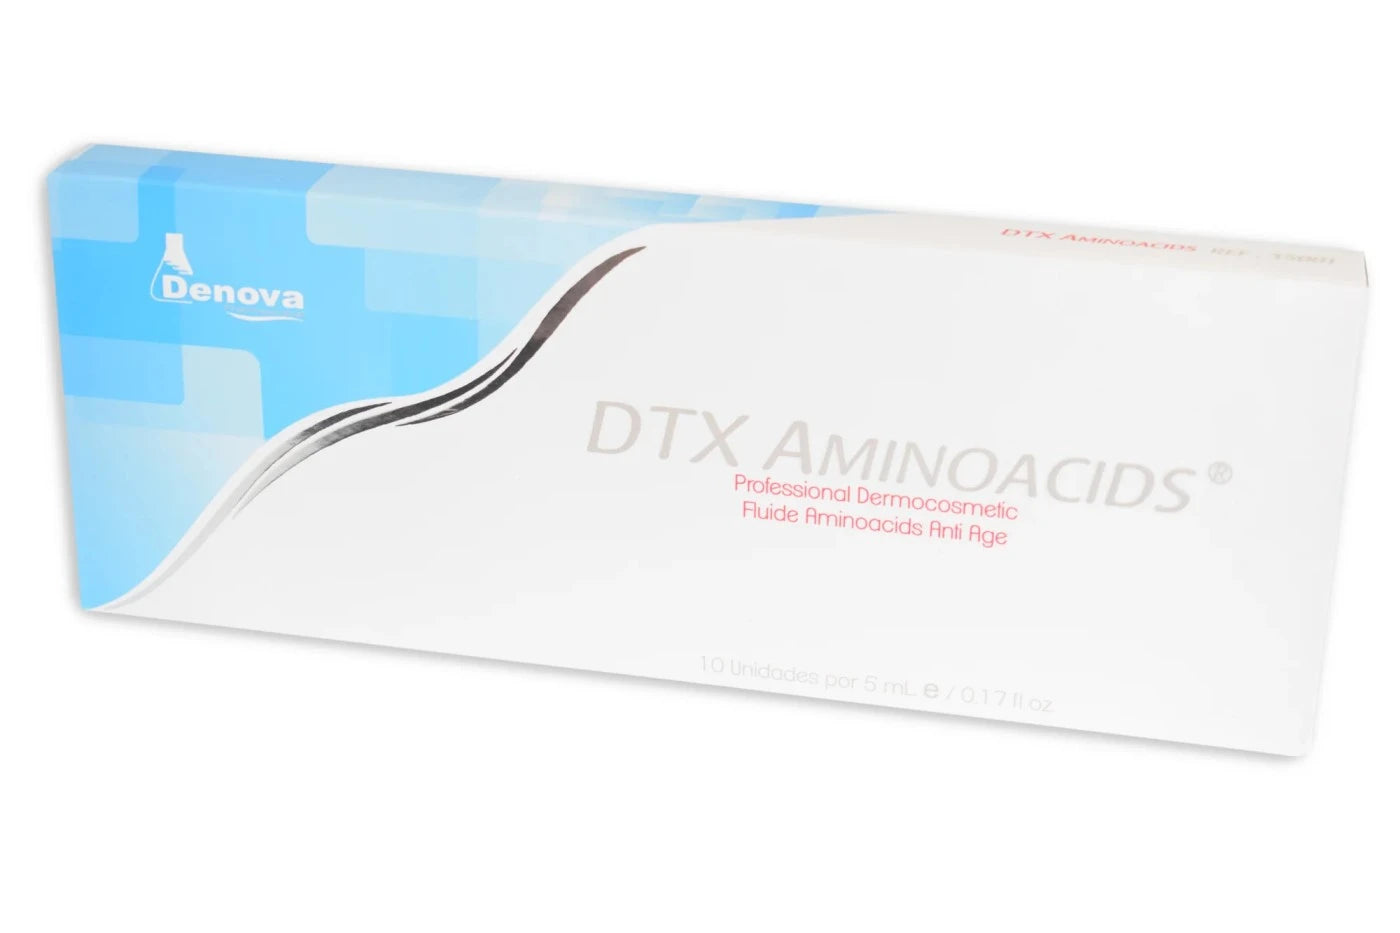 DTX Amino Acids